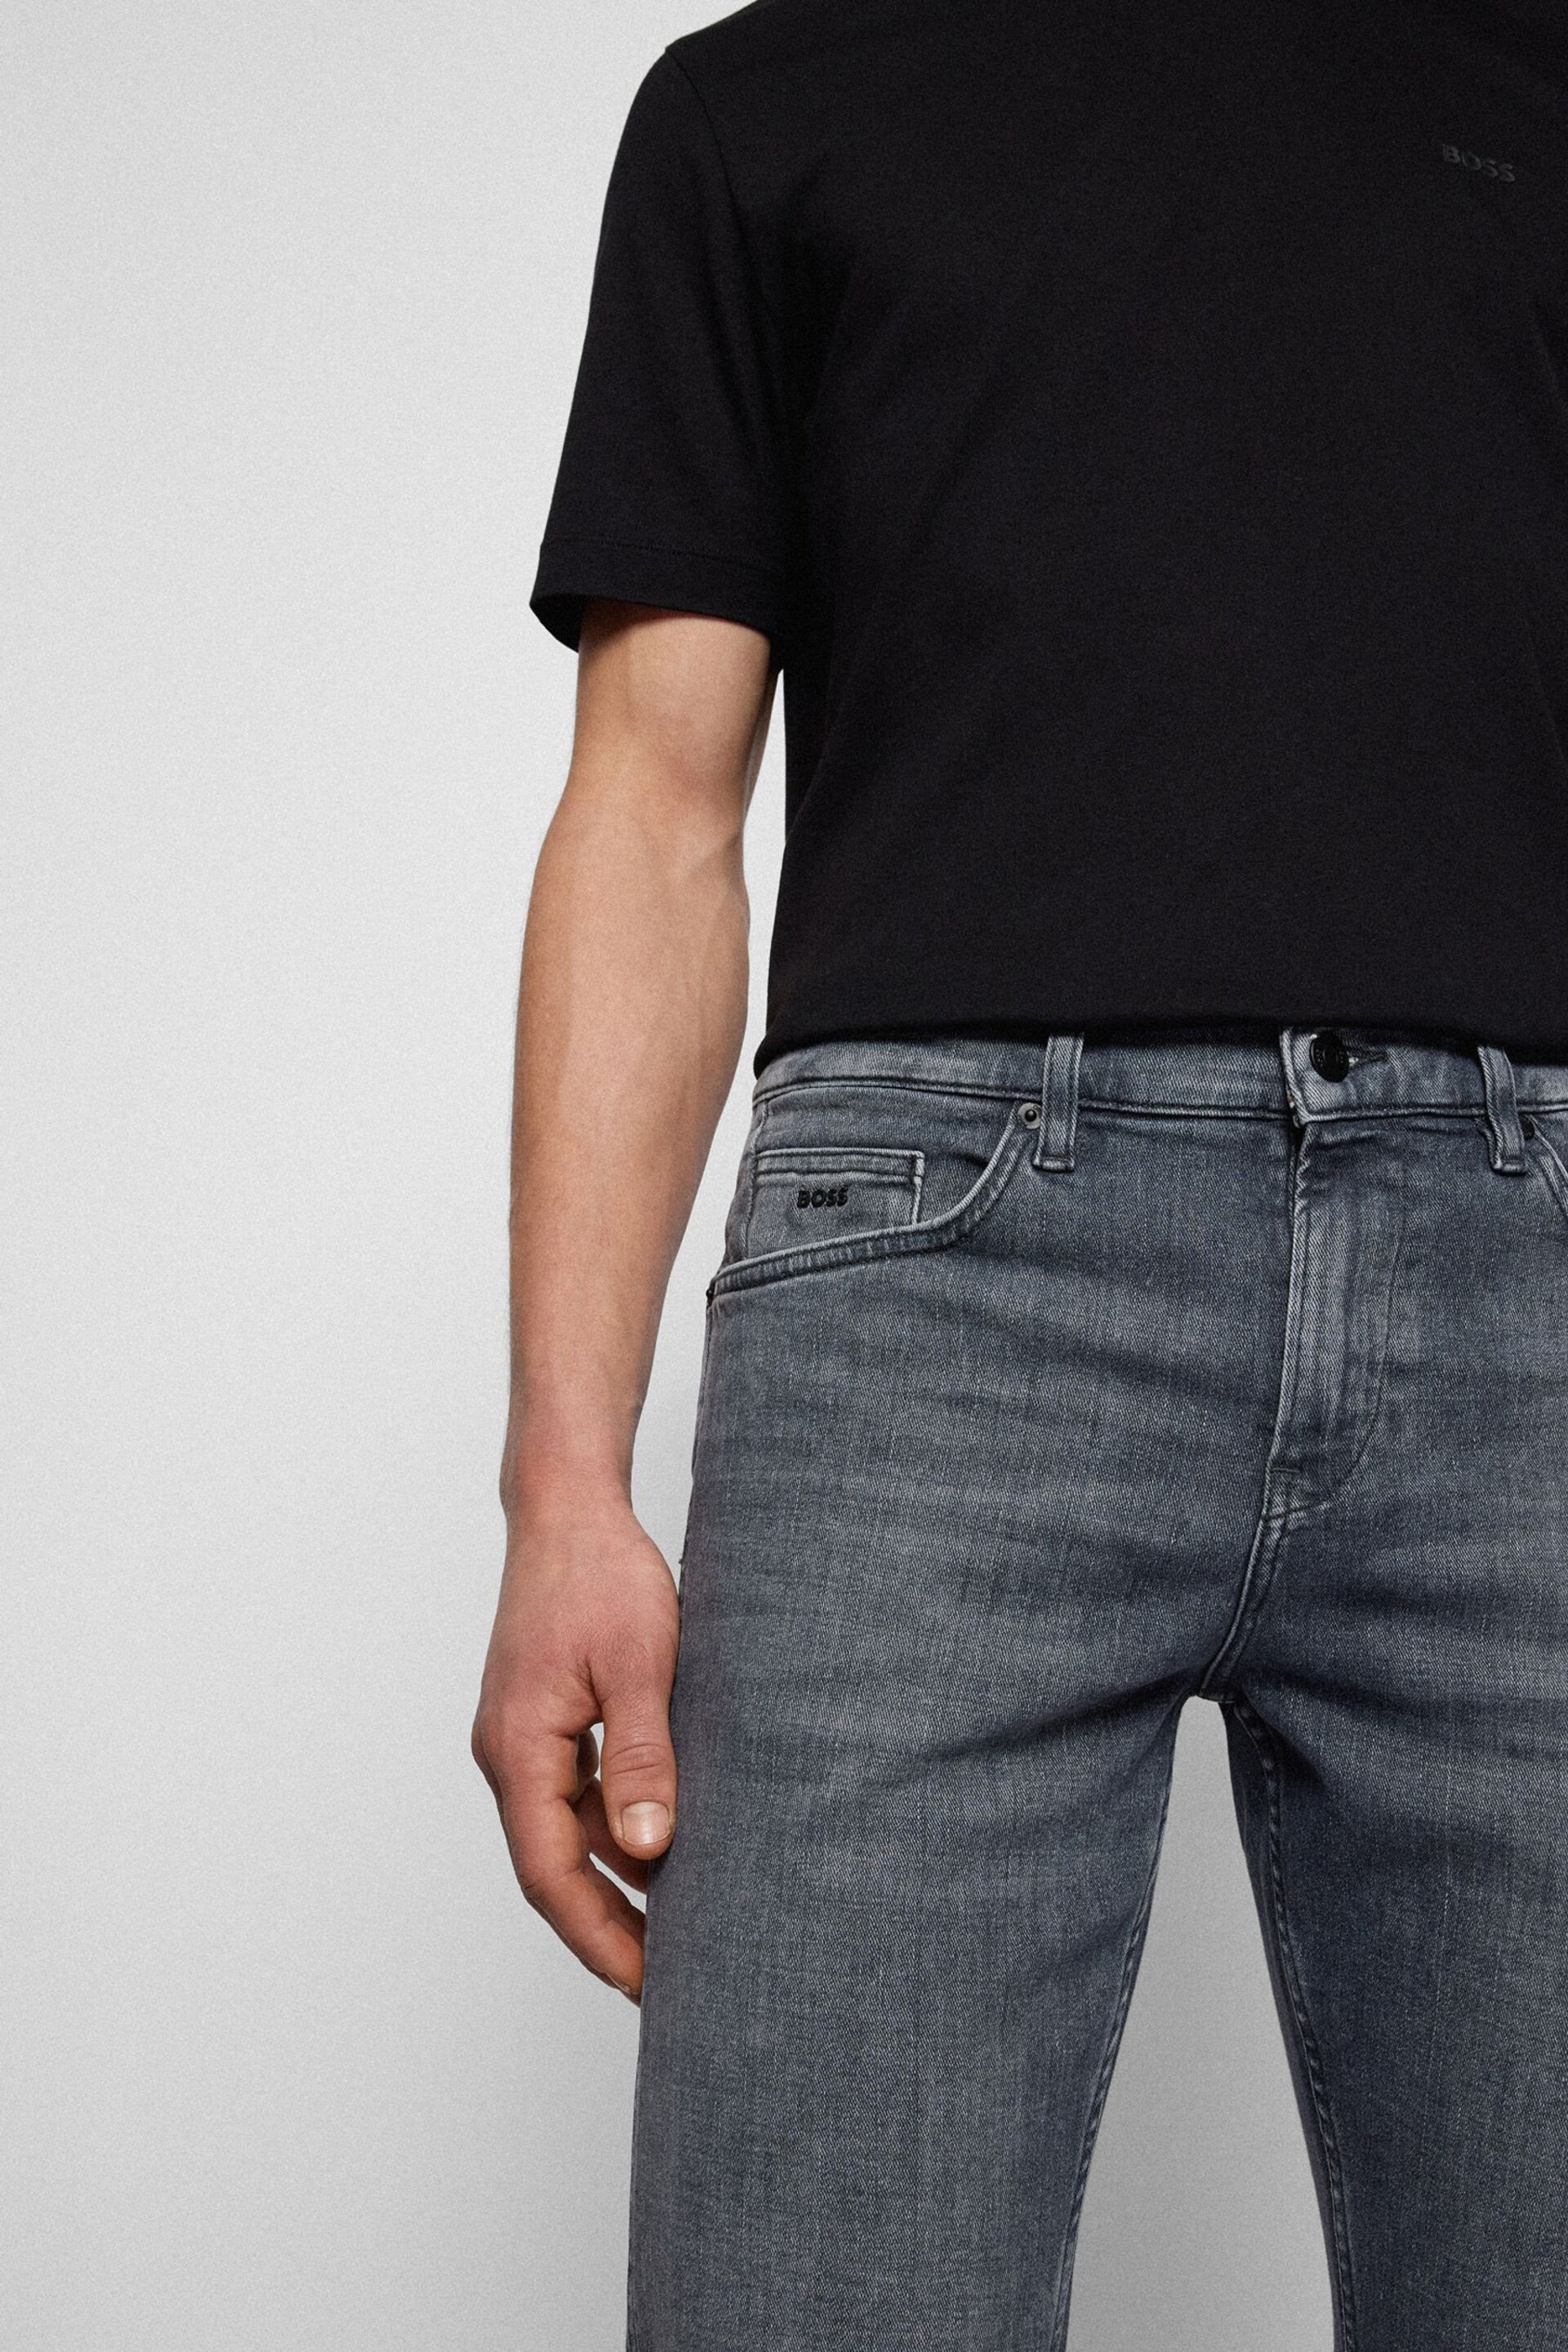 BOSS Light Grey Delaware Slim Fit Jeans - Image 4 of 5